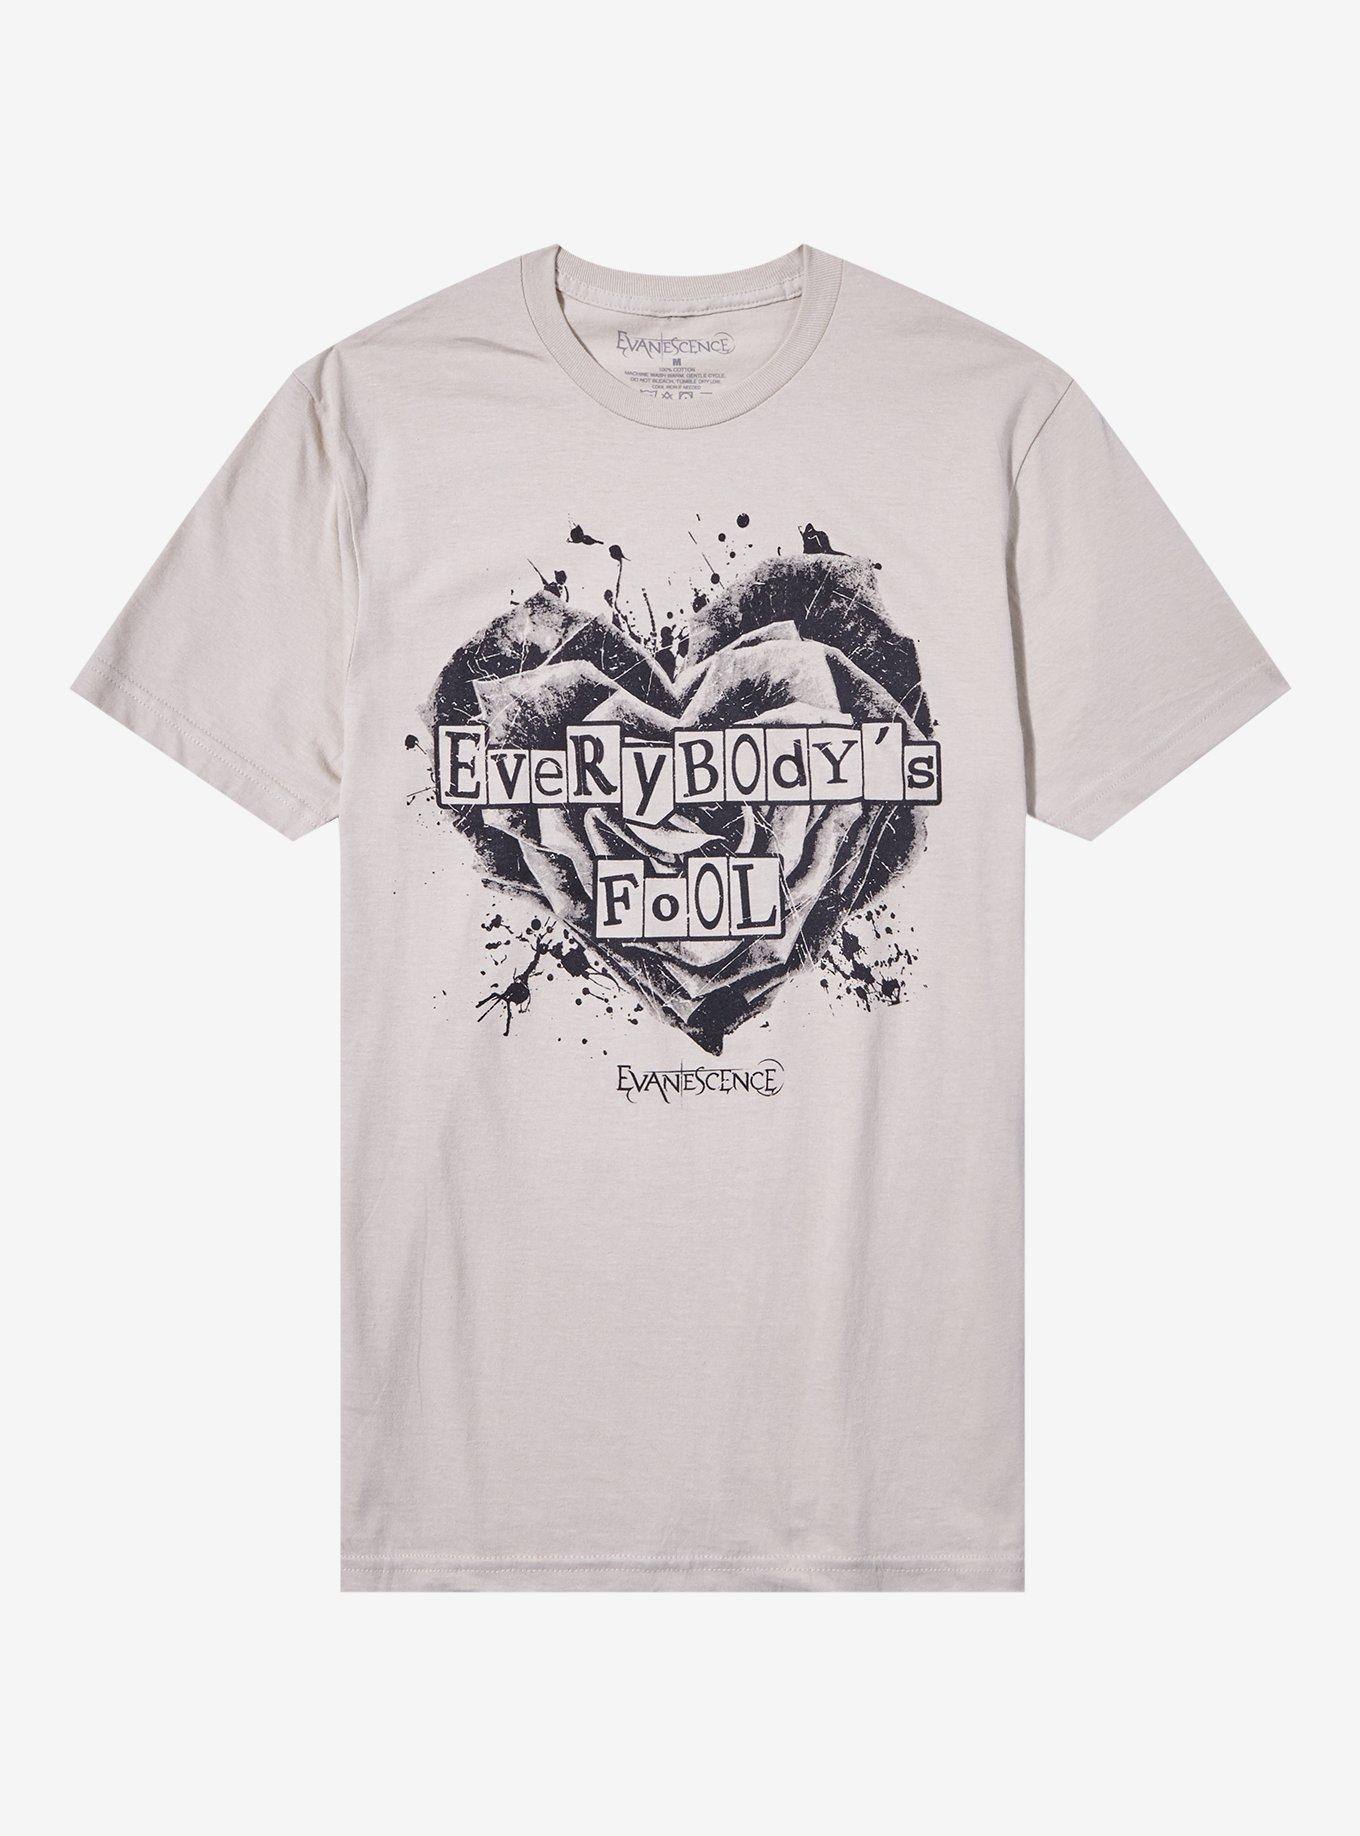 Evanescence Everybody's Fool Boyfriend Fit Girls T-Shirt | Hot Topic